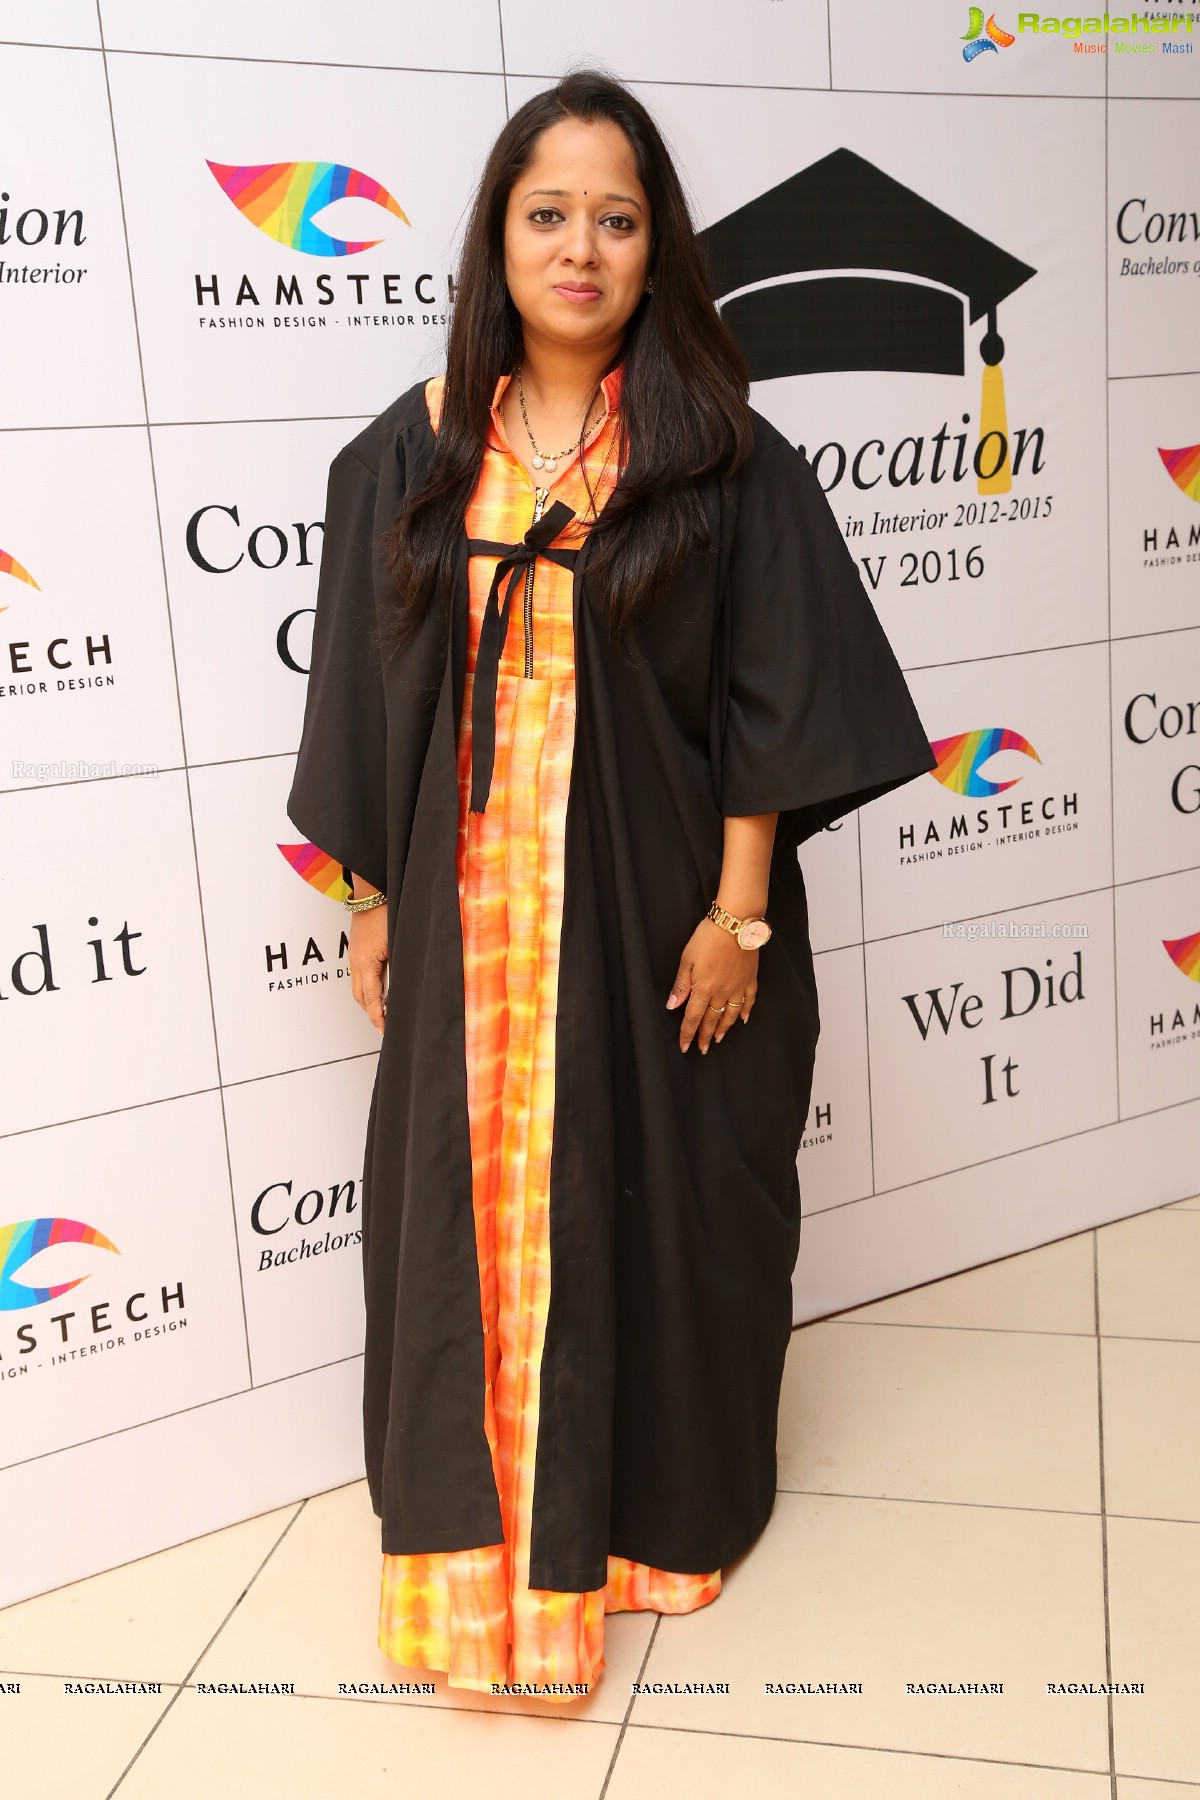 Hamstech Institute of Fashion and Interior Design Convocation Ceremony 2011-2015 at FTAPCCI, Hyderabad